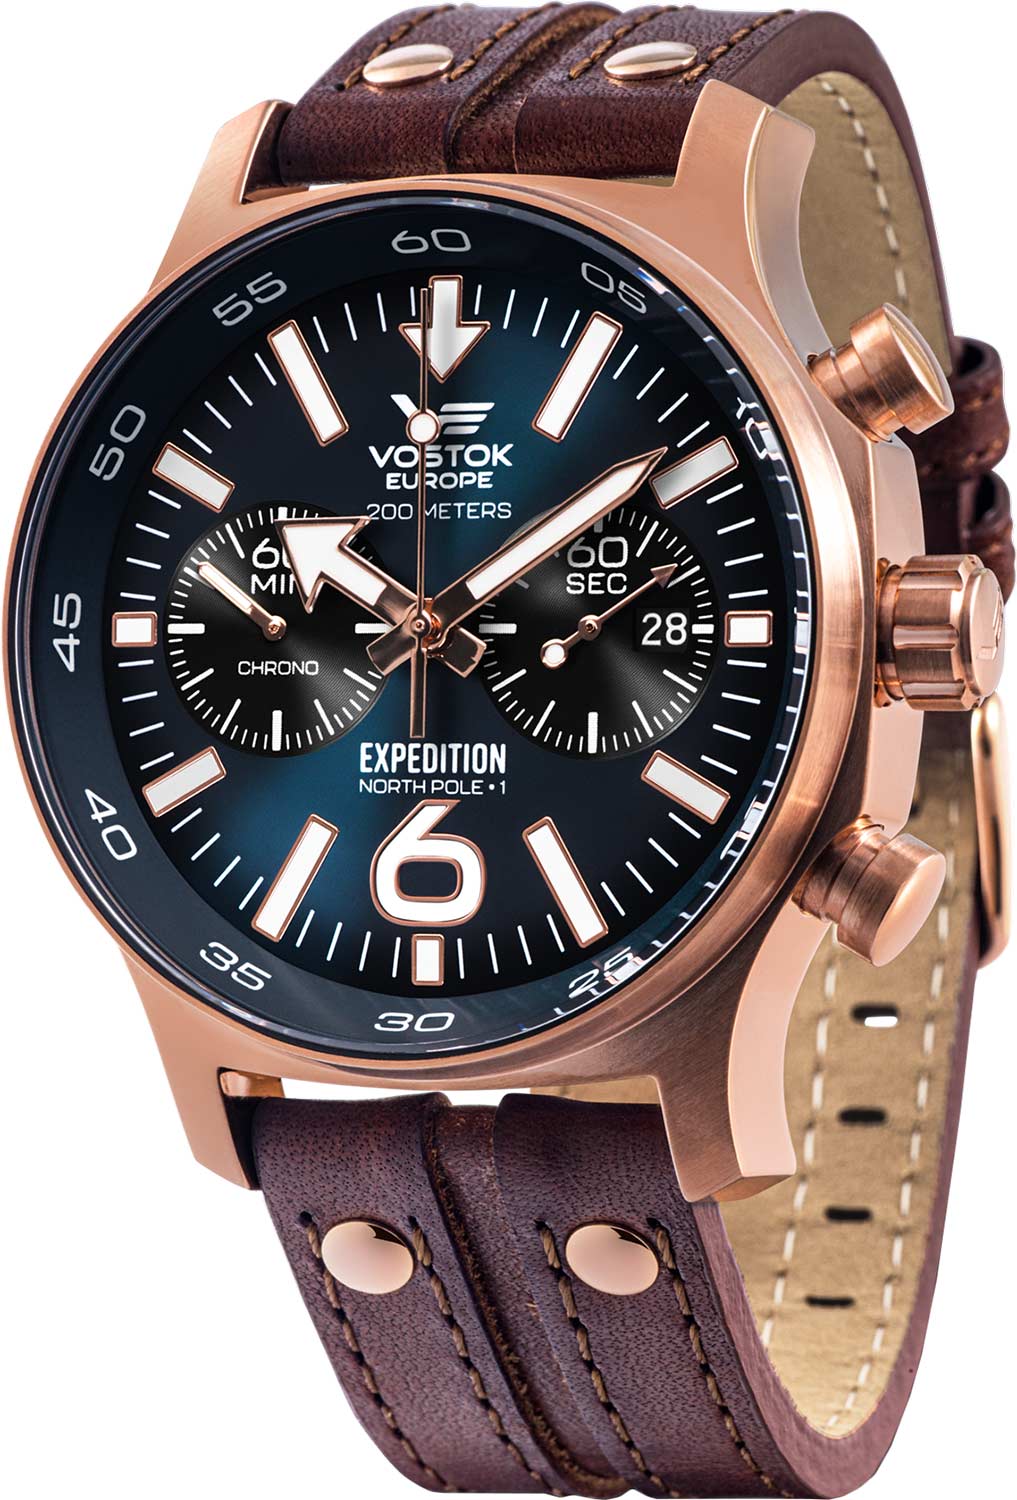 Наручные часы Vostok Europe 6S21/595B645 с хронографом